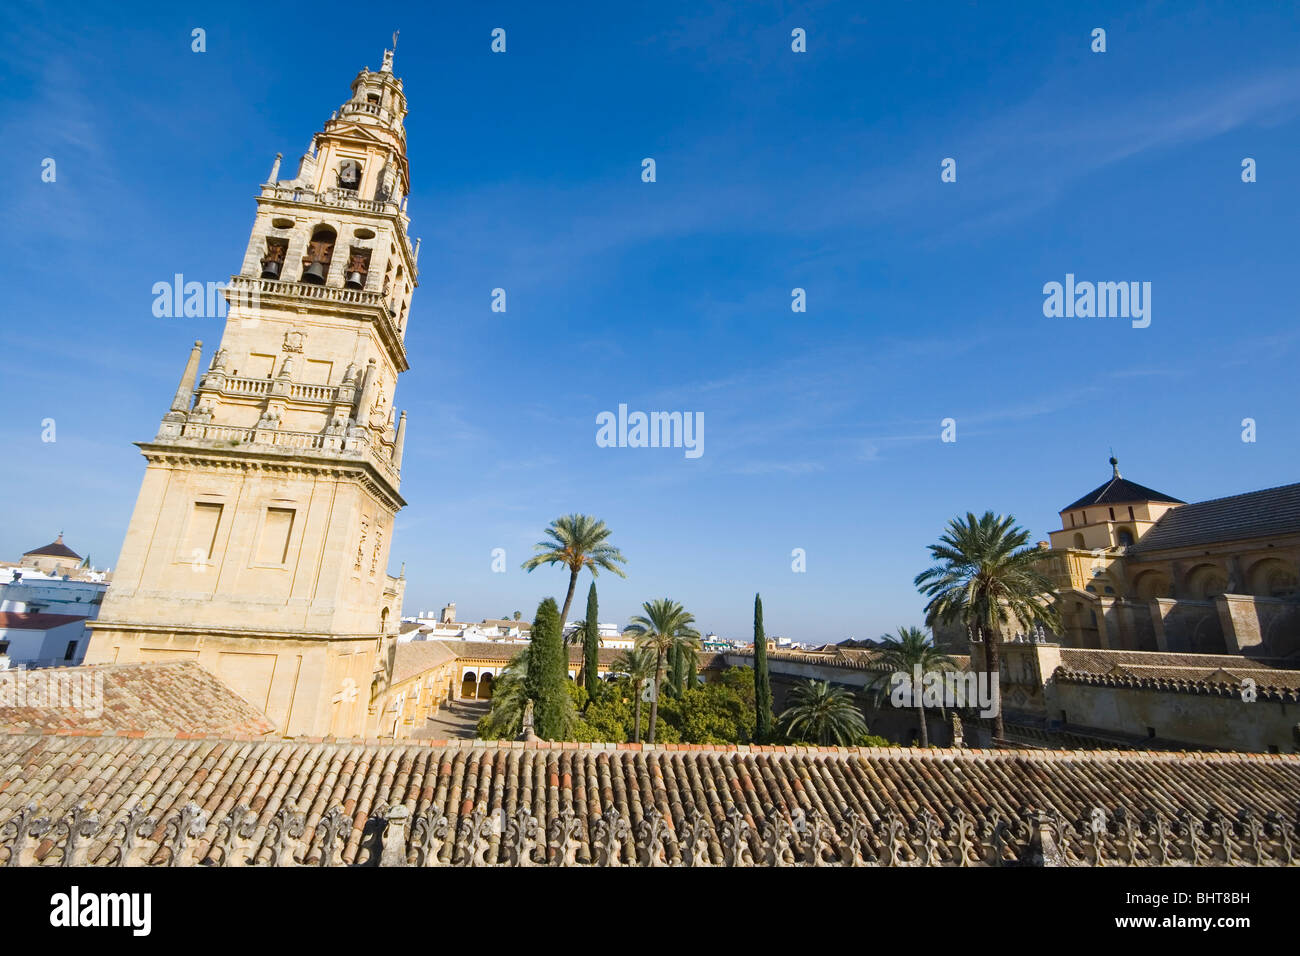 Cordoba, Spain. Alminar tower of La Mezquita The Great Mosque Stock Photo